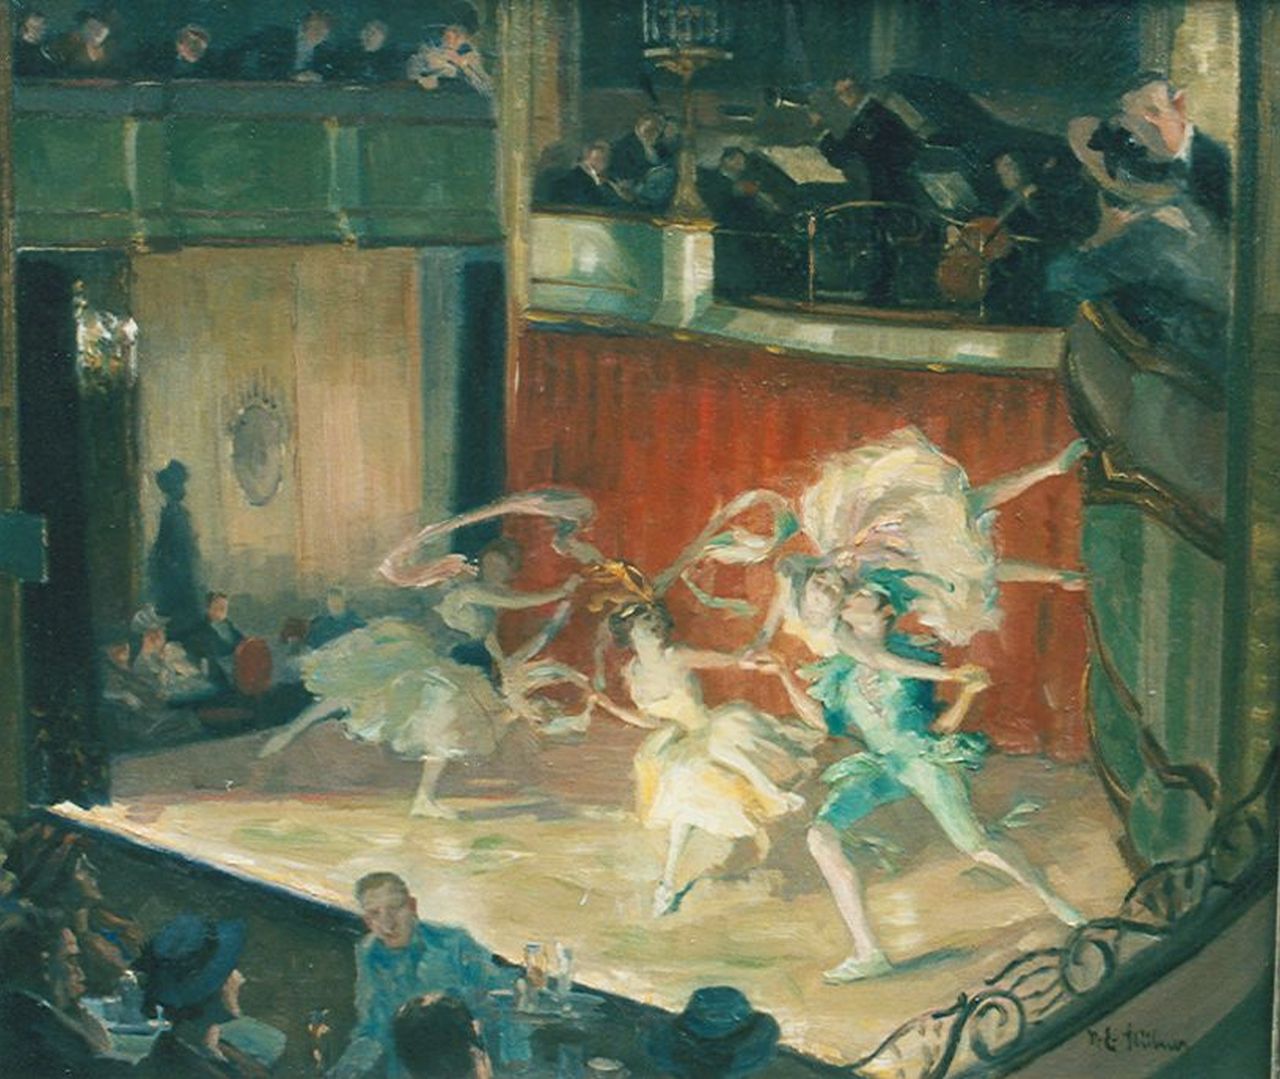 Stübner R.E.  | Robert Emil Stübner, The performance, Öl auf Leinwand 61,0 x 71,0 cm, signed l.r.